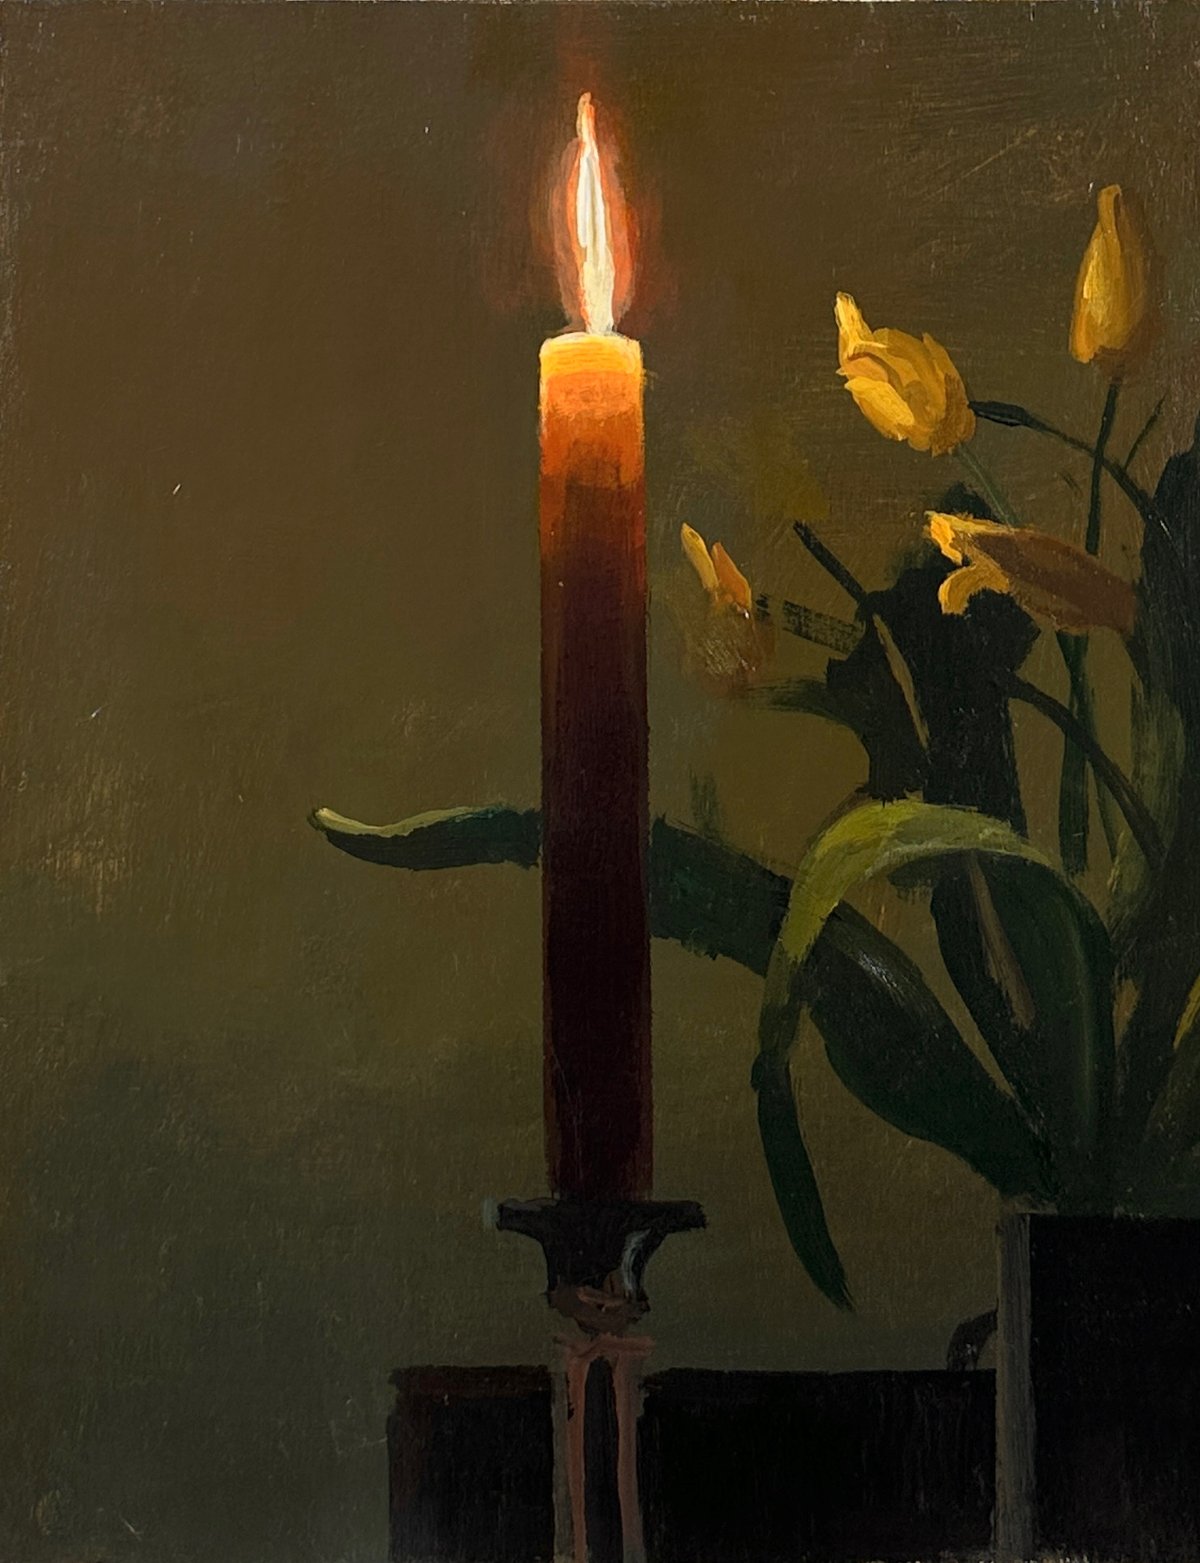 Image of Candle & Tulips 